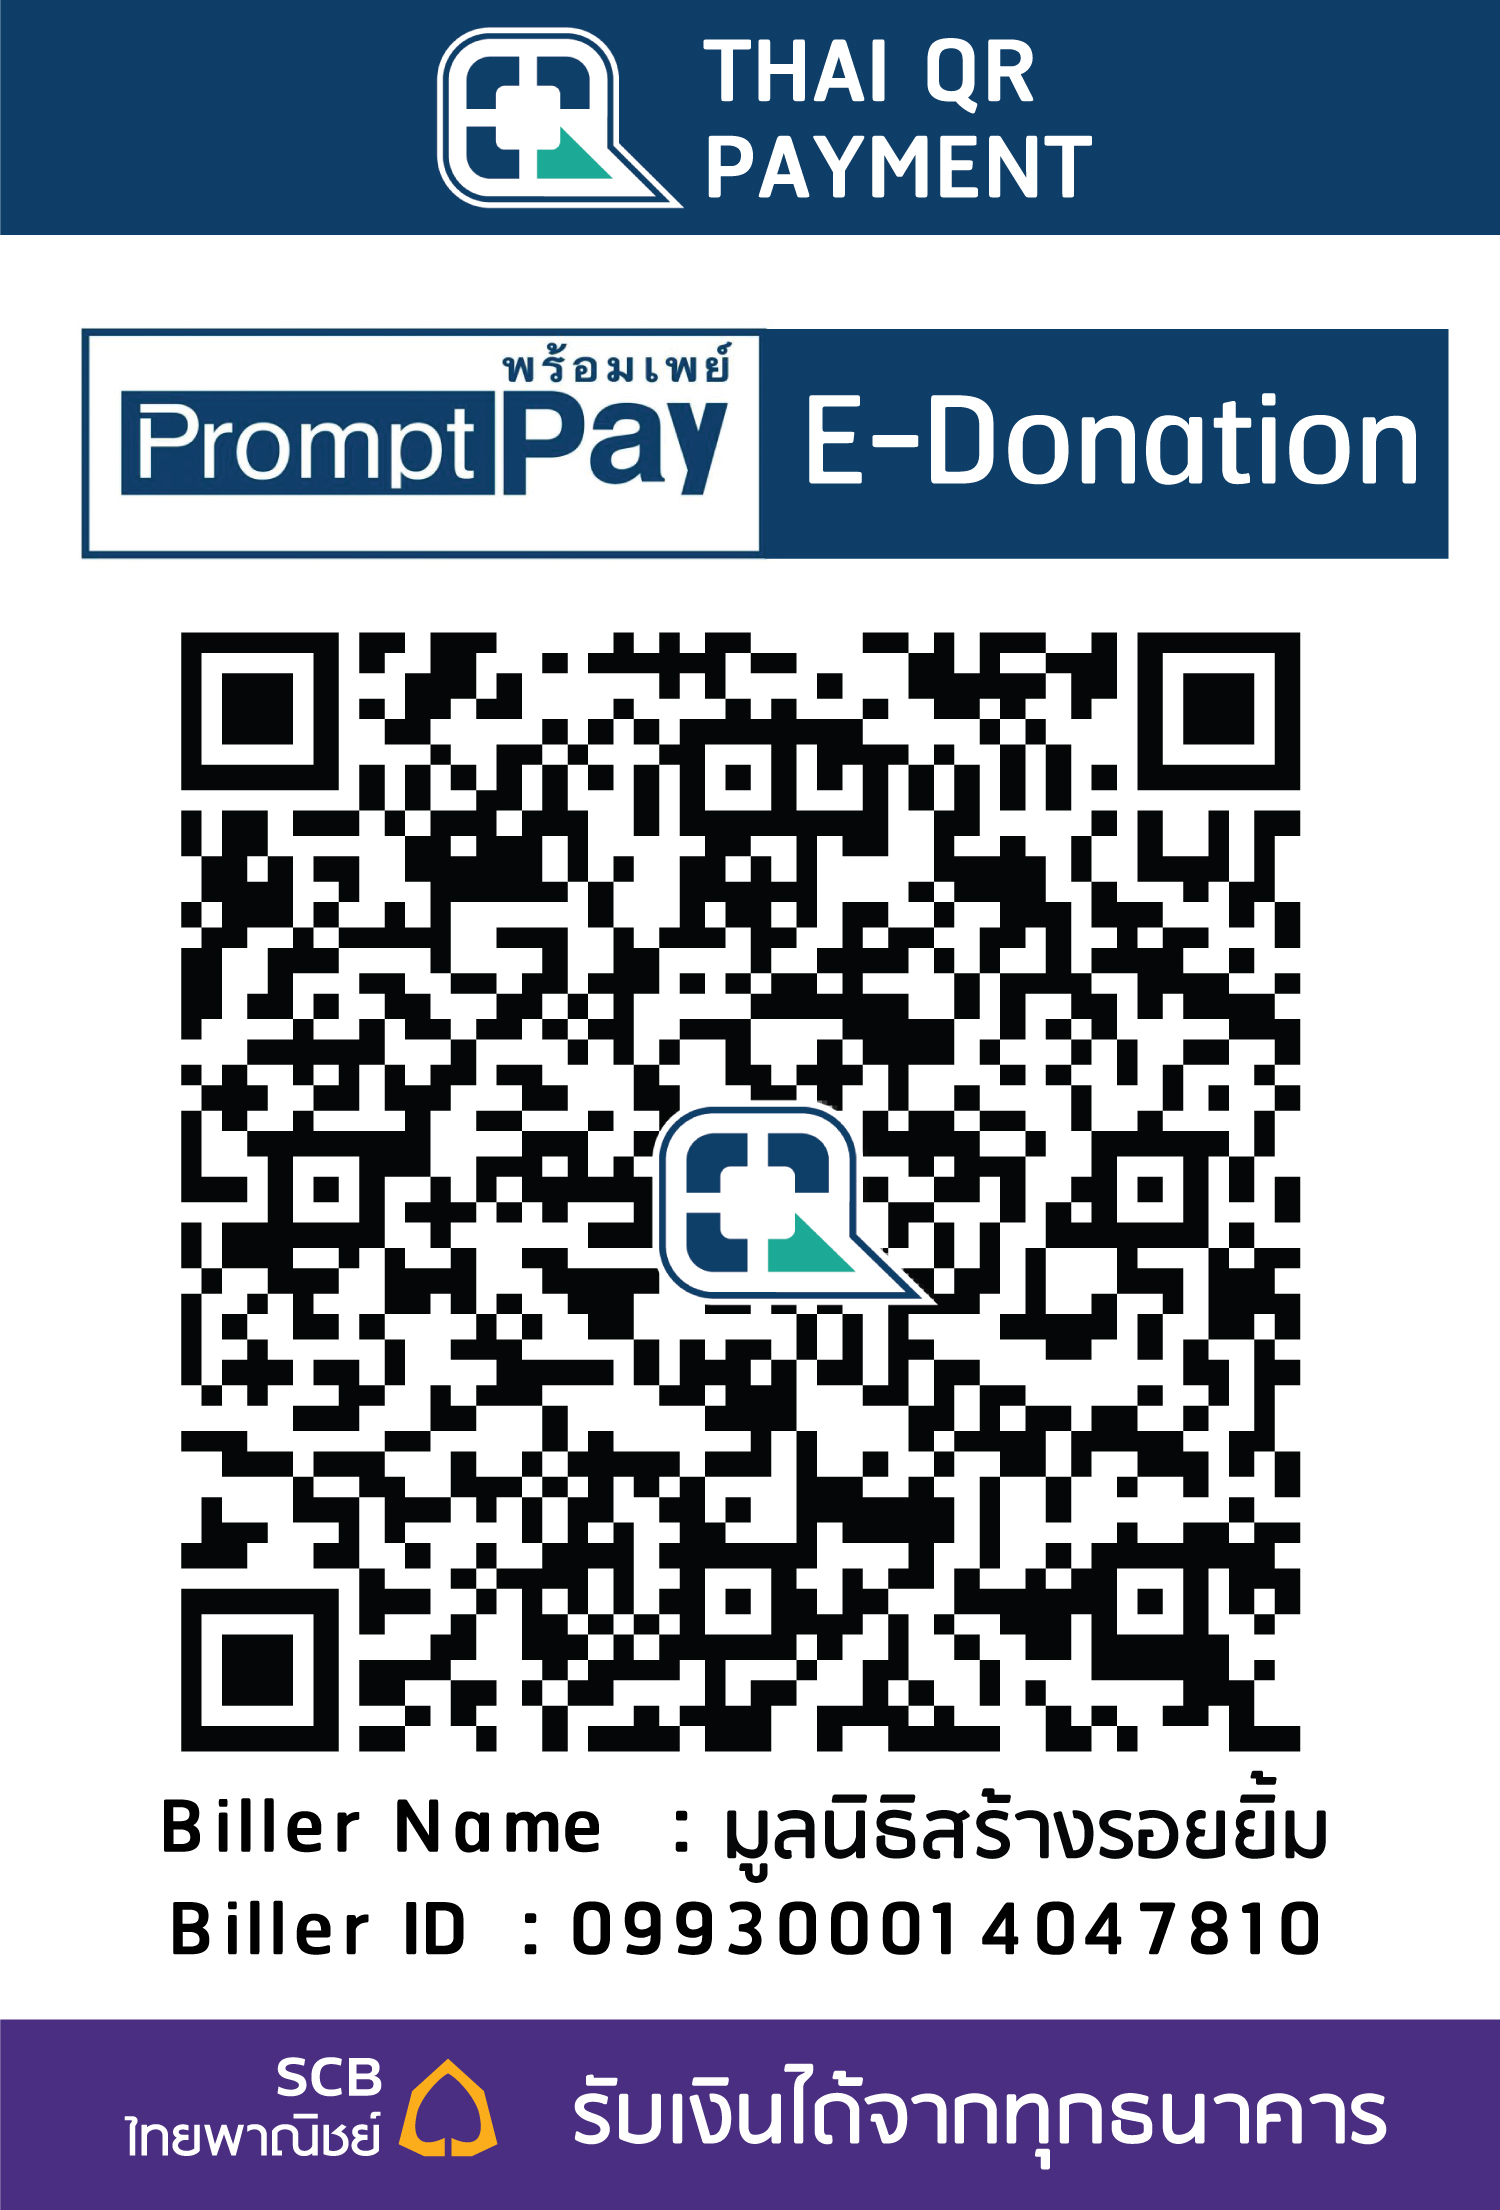 Donate to Operation Smile Thailand via QR code (e-donation)